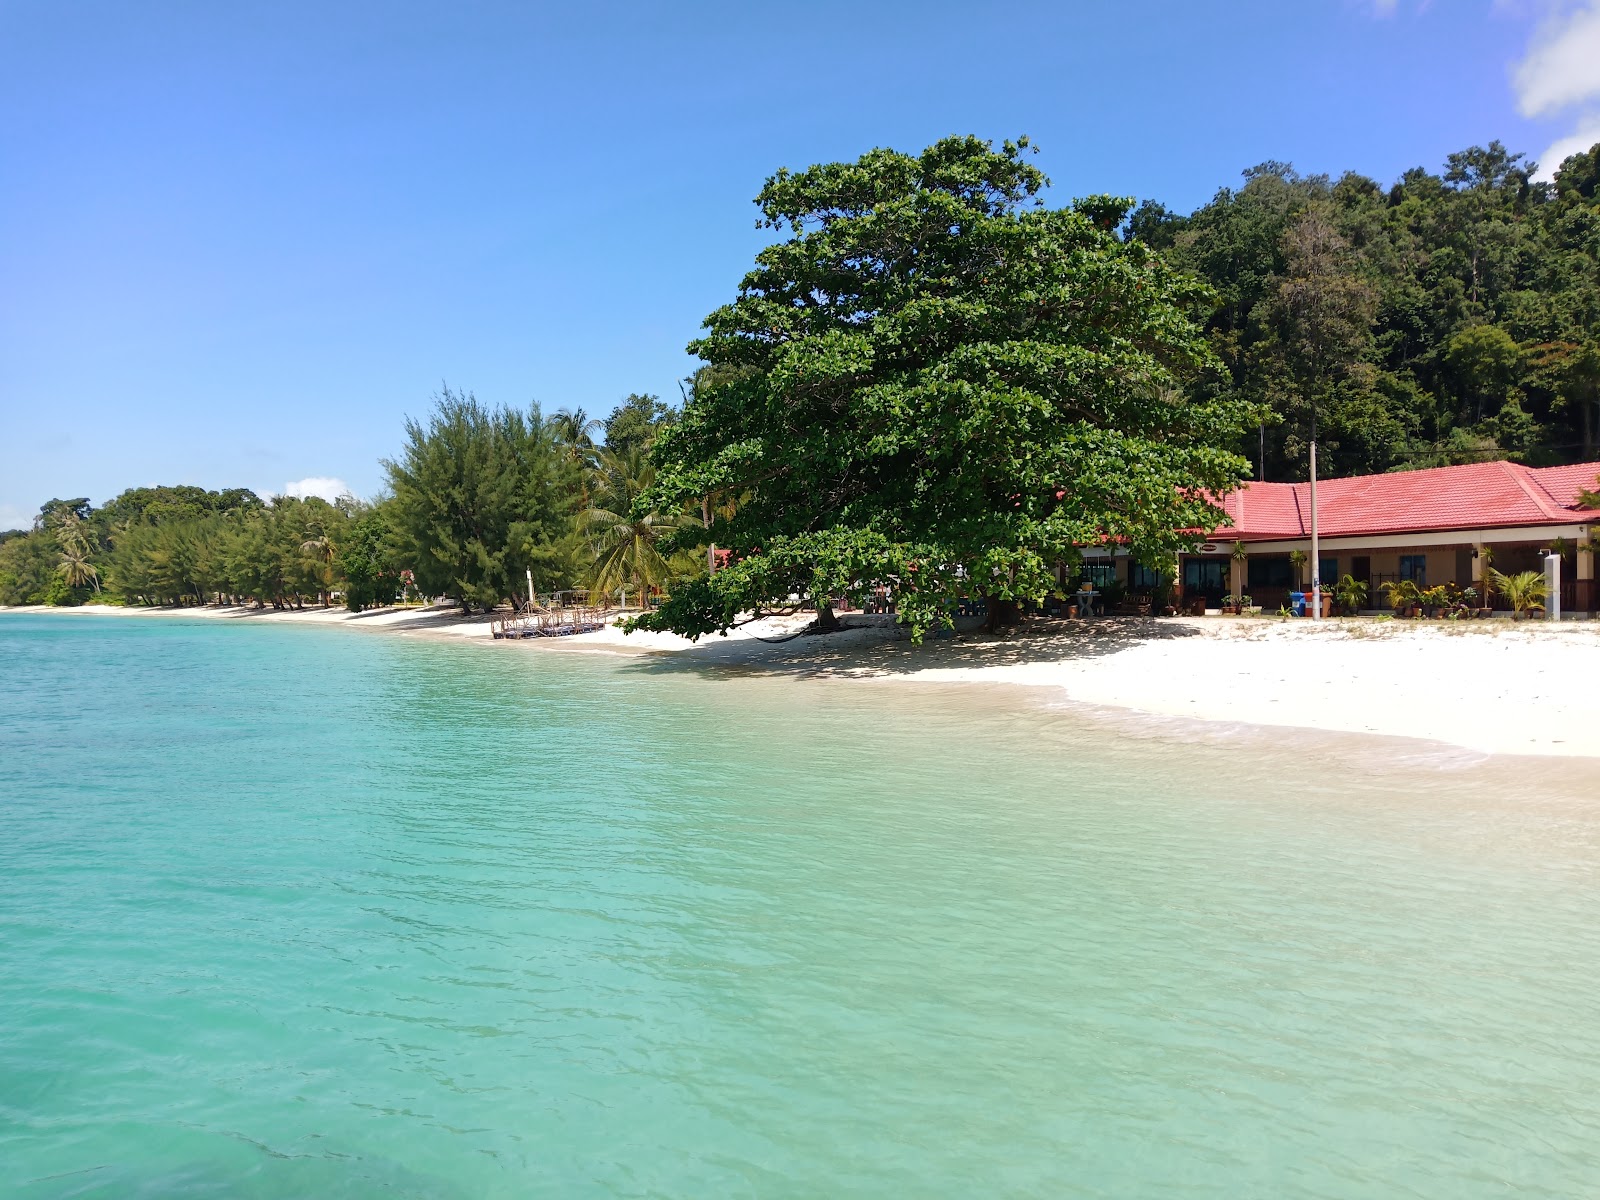 Foto av Shaz Resort beach med vit sand yta